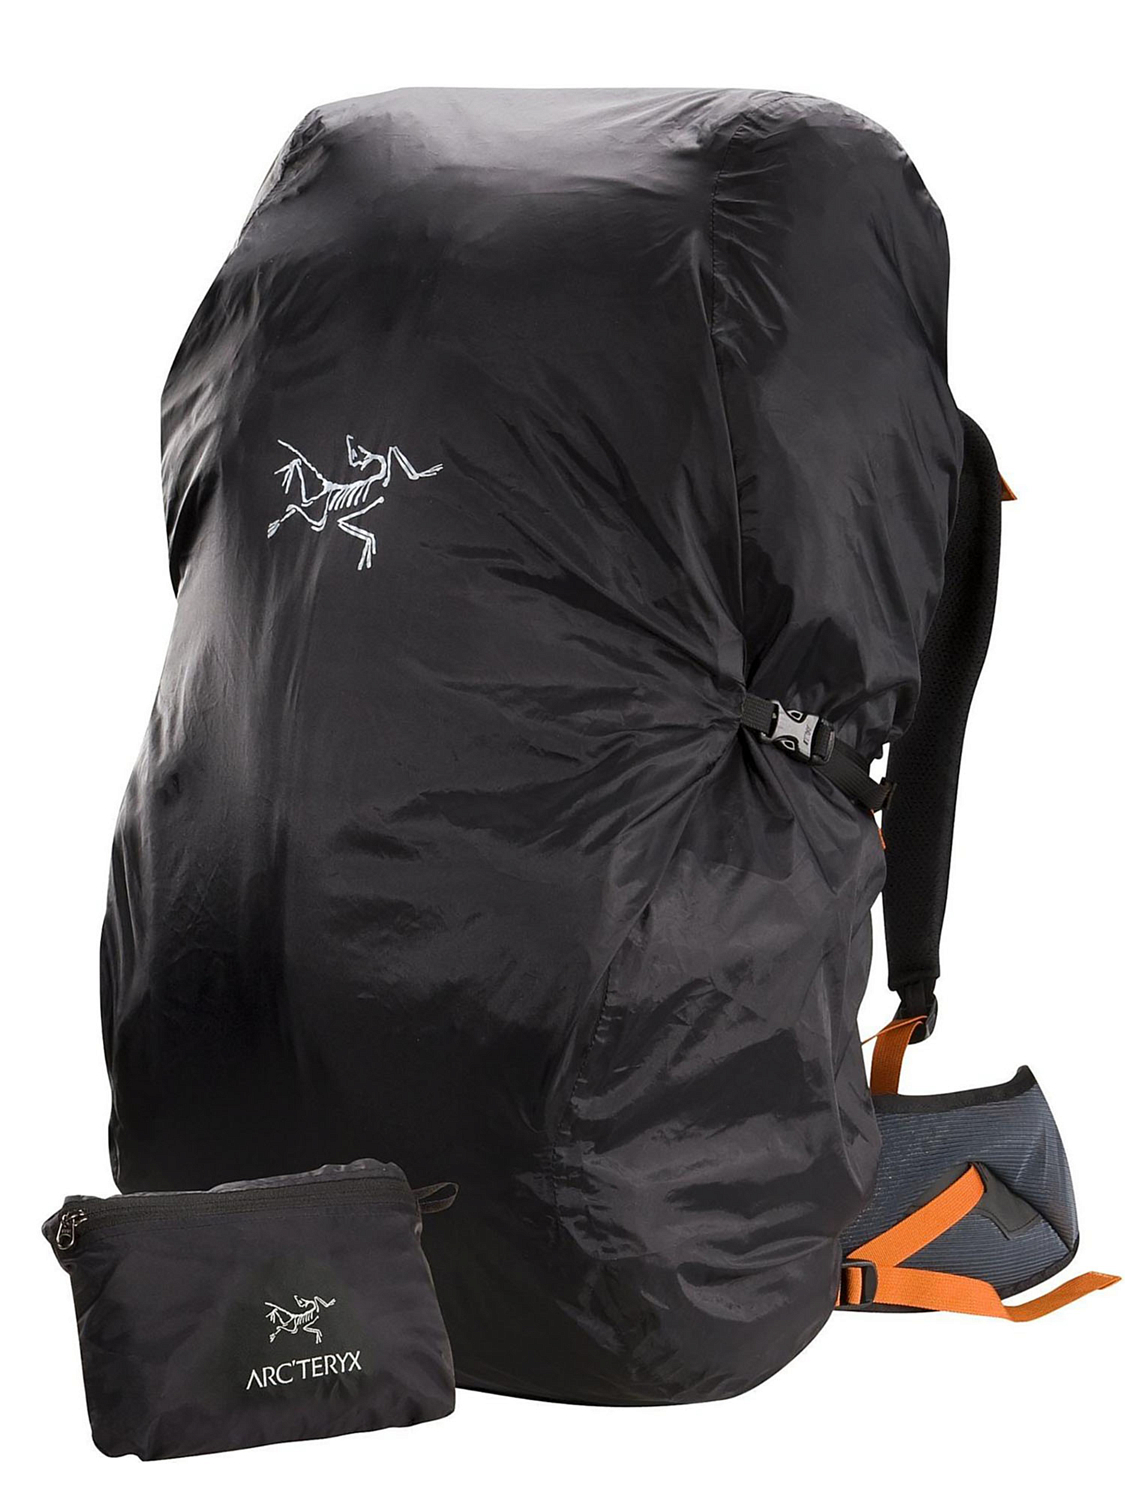 Чехол от дождя Arcteryx Pack Shelter - XS Black